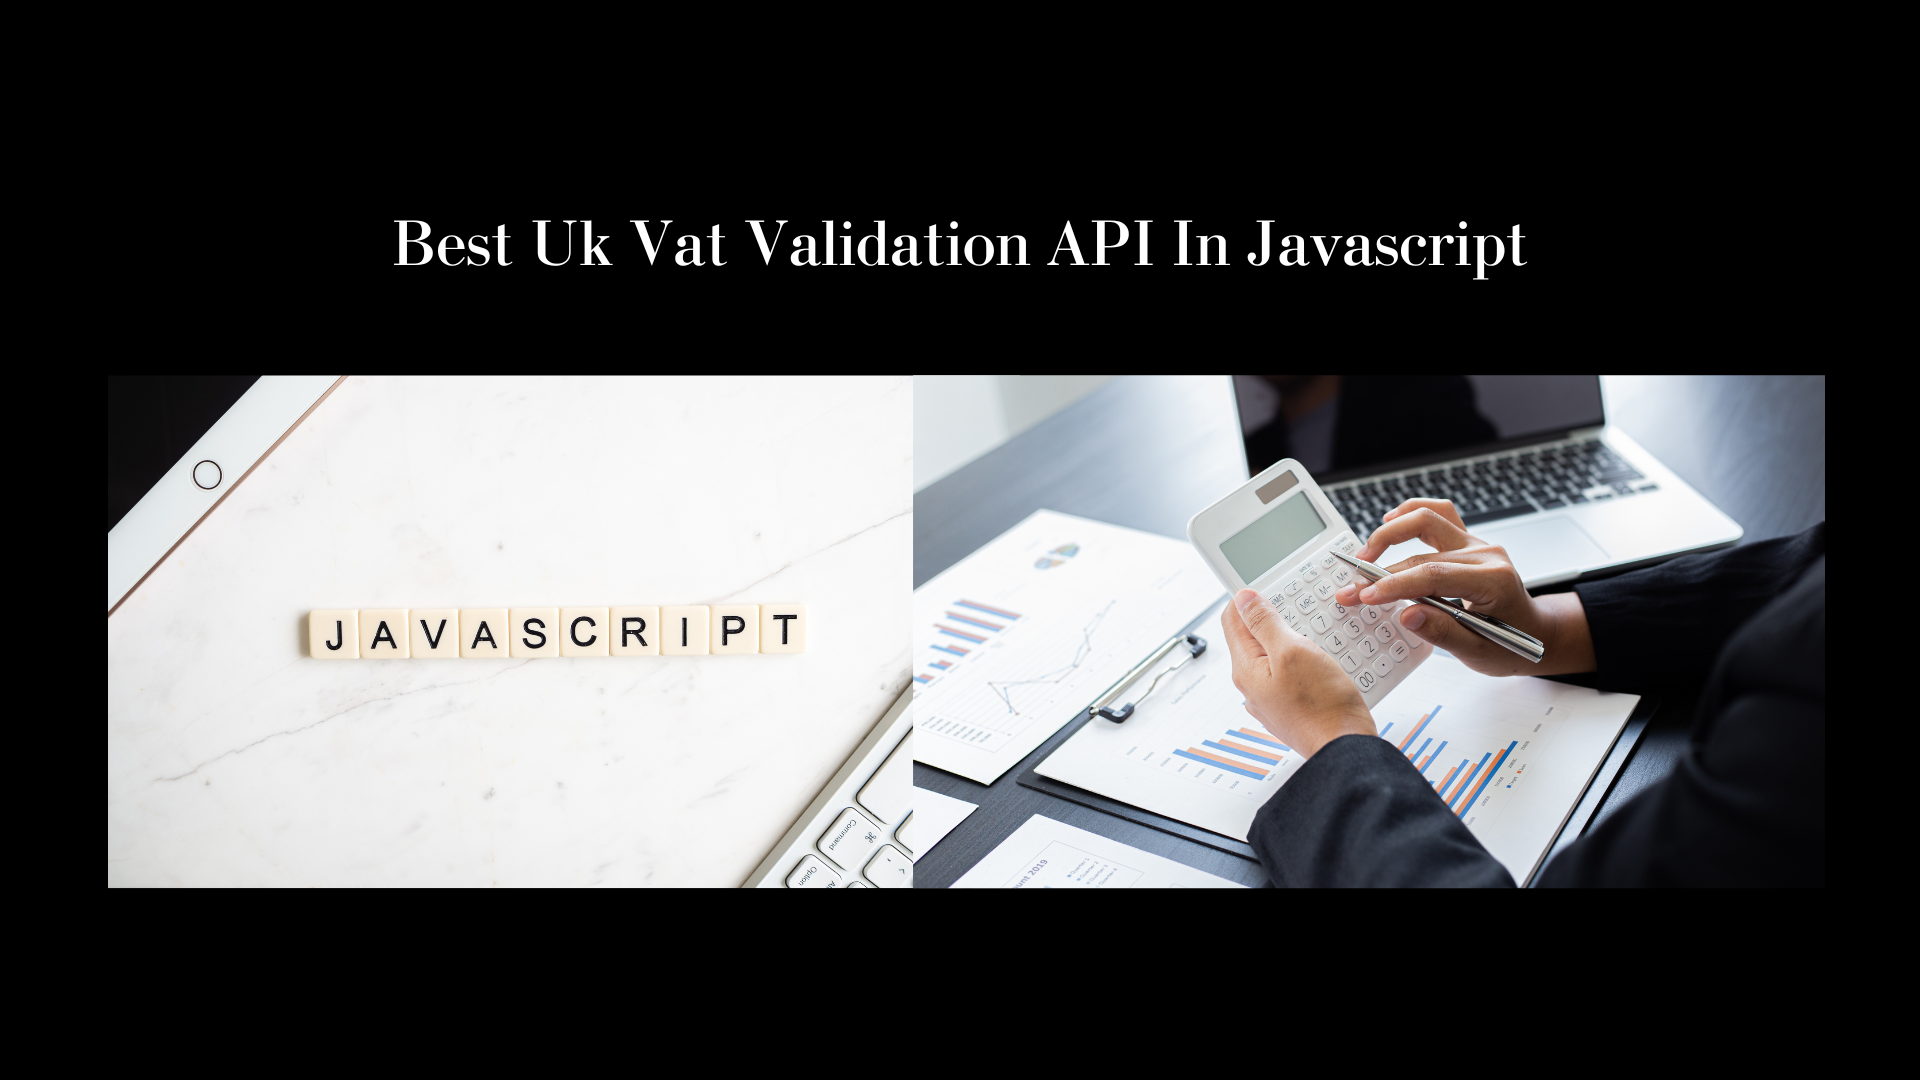 Best Uk Vat Validation API In Javascript